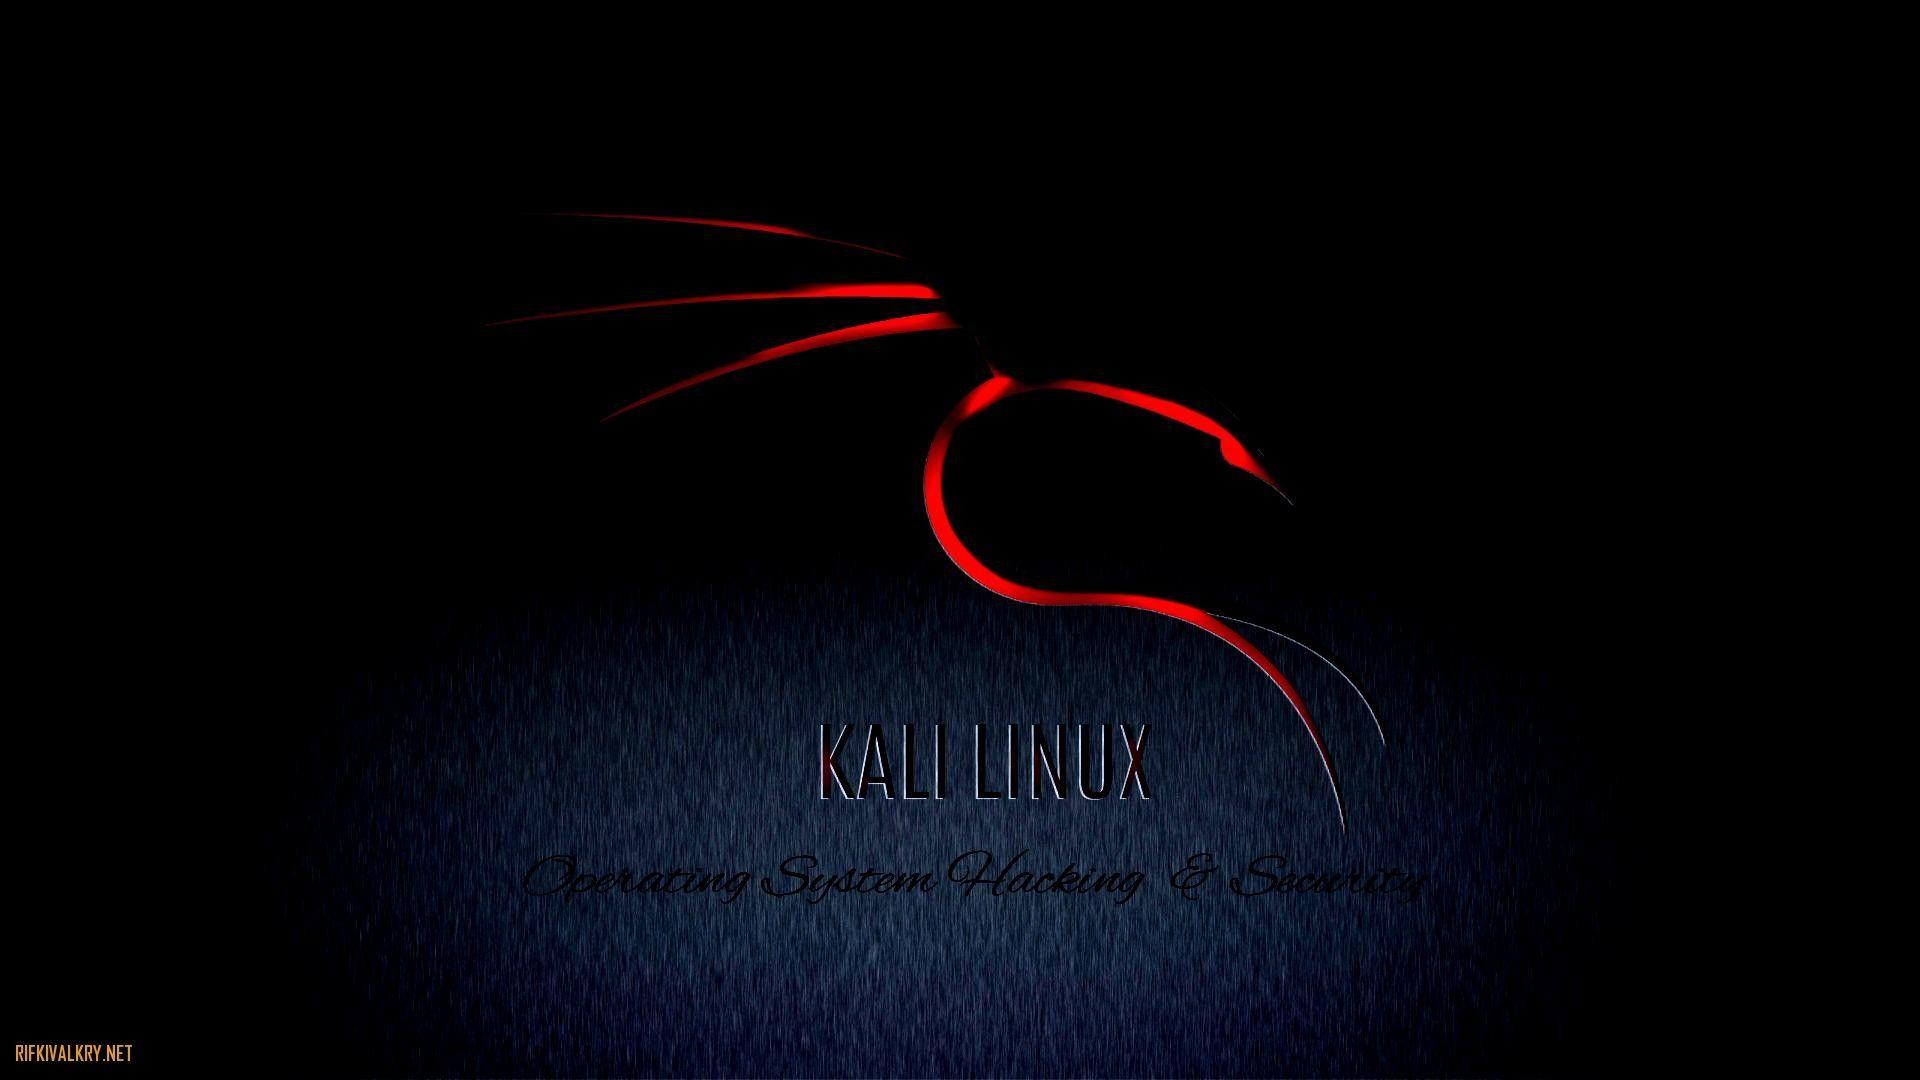 Kali Linux Hd Wallpapers 4k Hd Kali Linux Backgrounds On Wallpaperbat